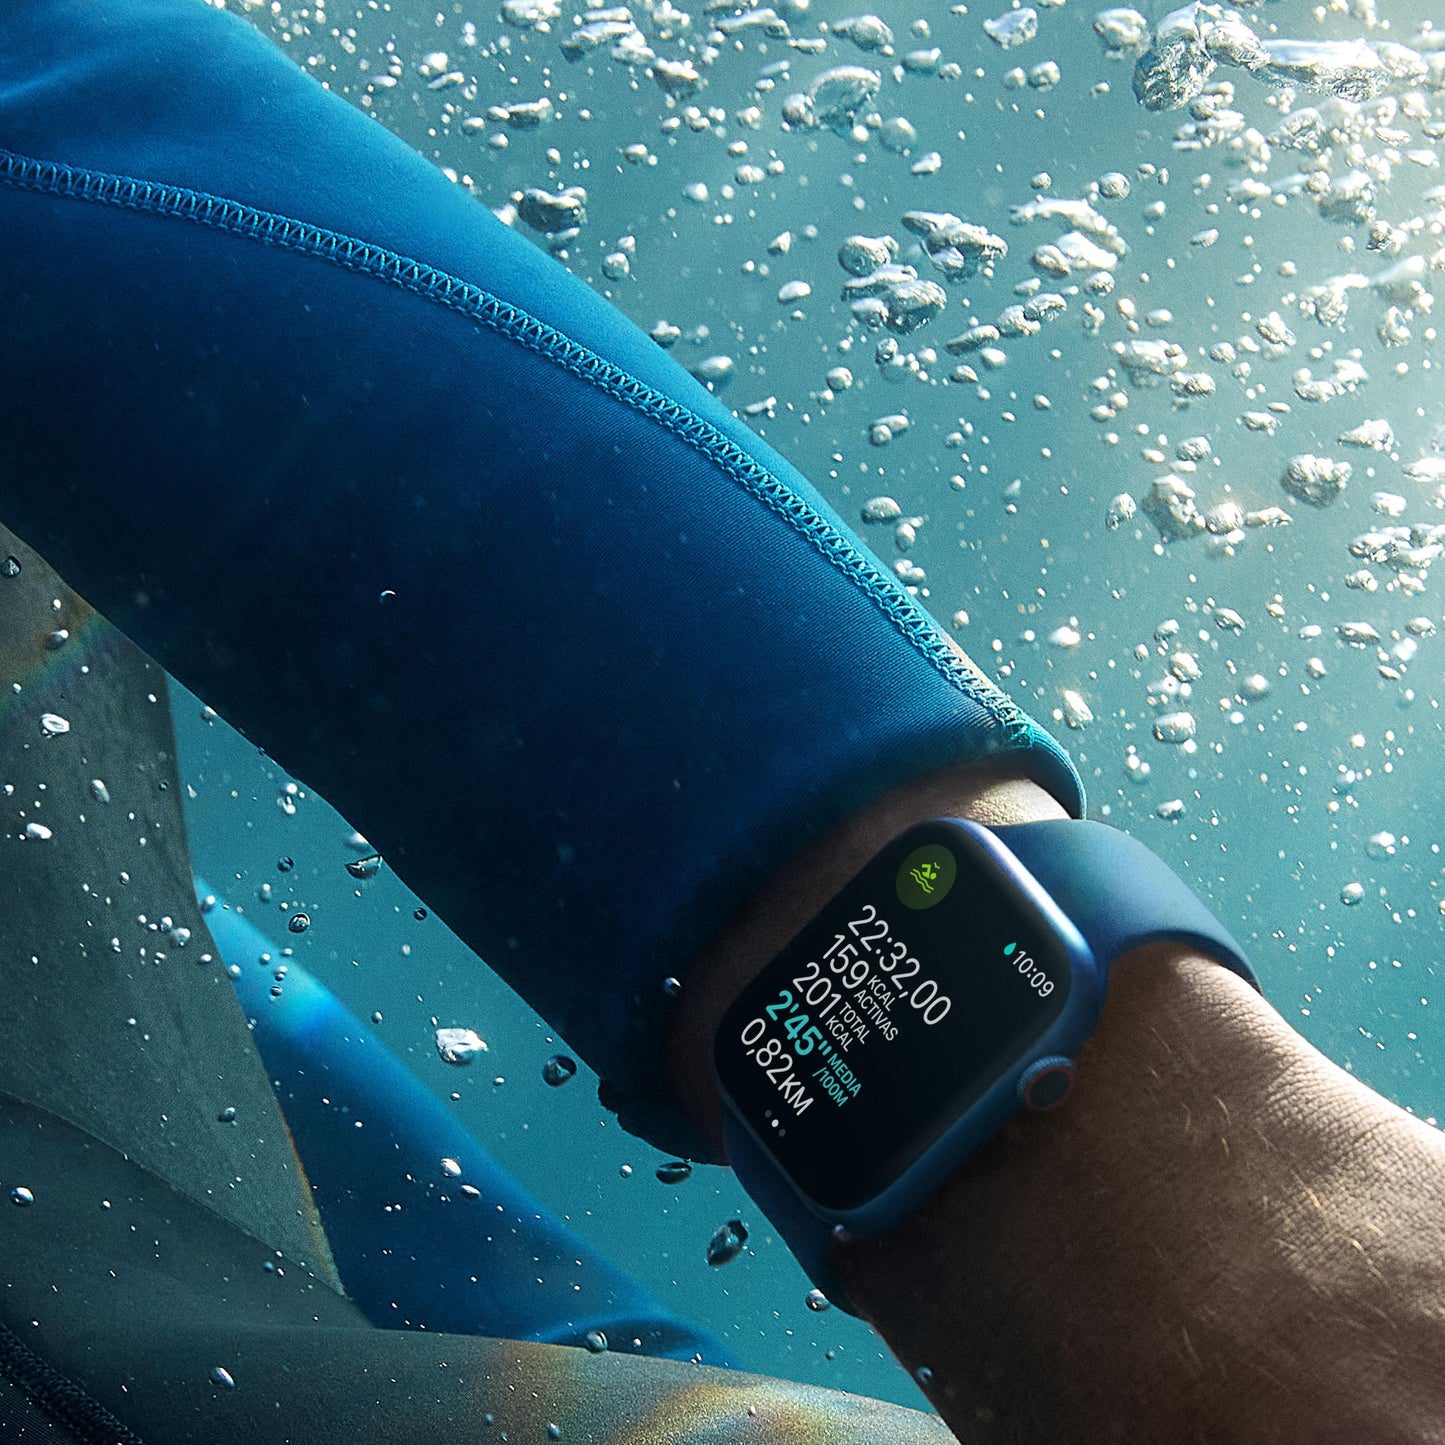 Apple Watch Nike Series 7 (GPS) - Caja de aluminio en color medianoche de 45 mm - Correa Nike Sport antracita/negra - Talla única